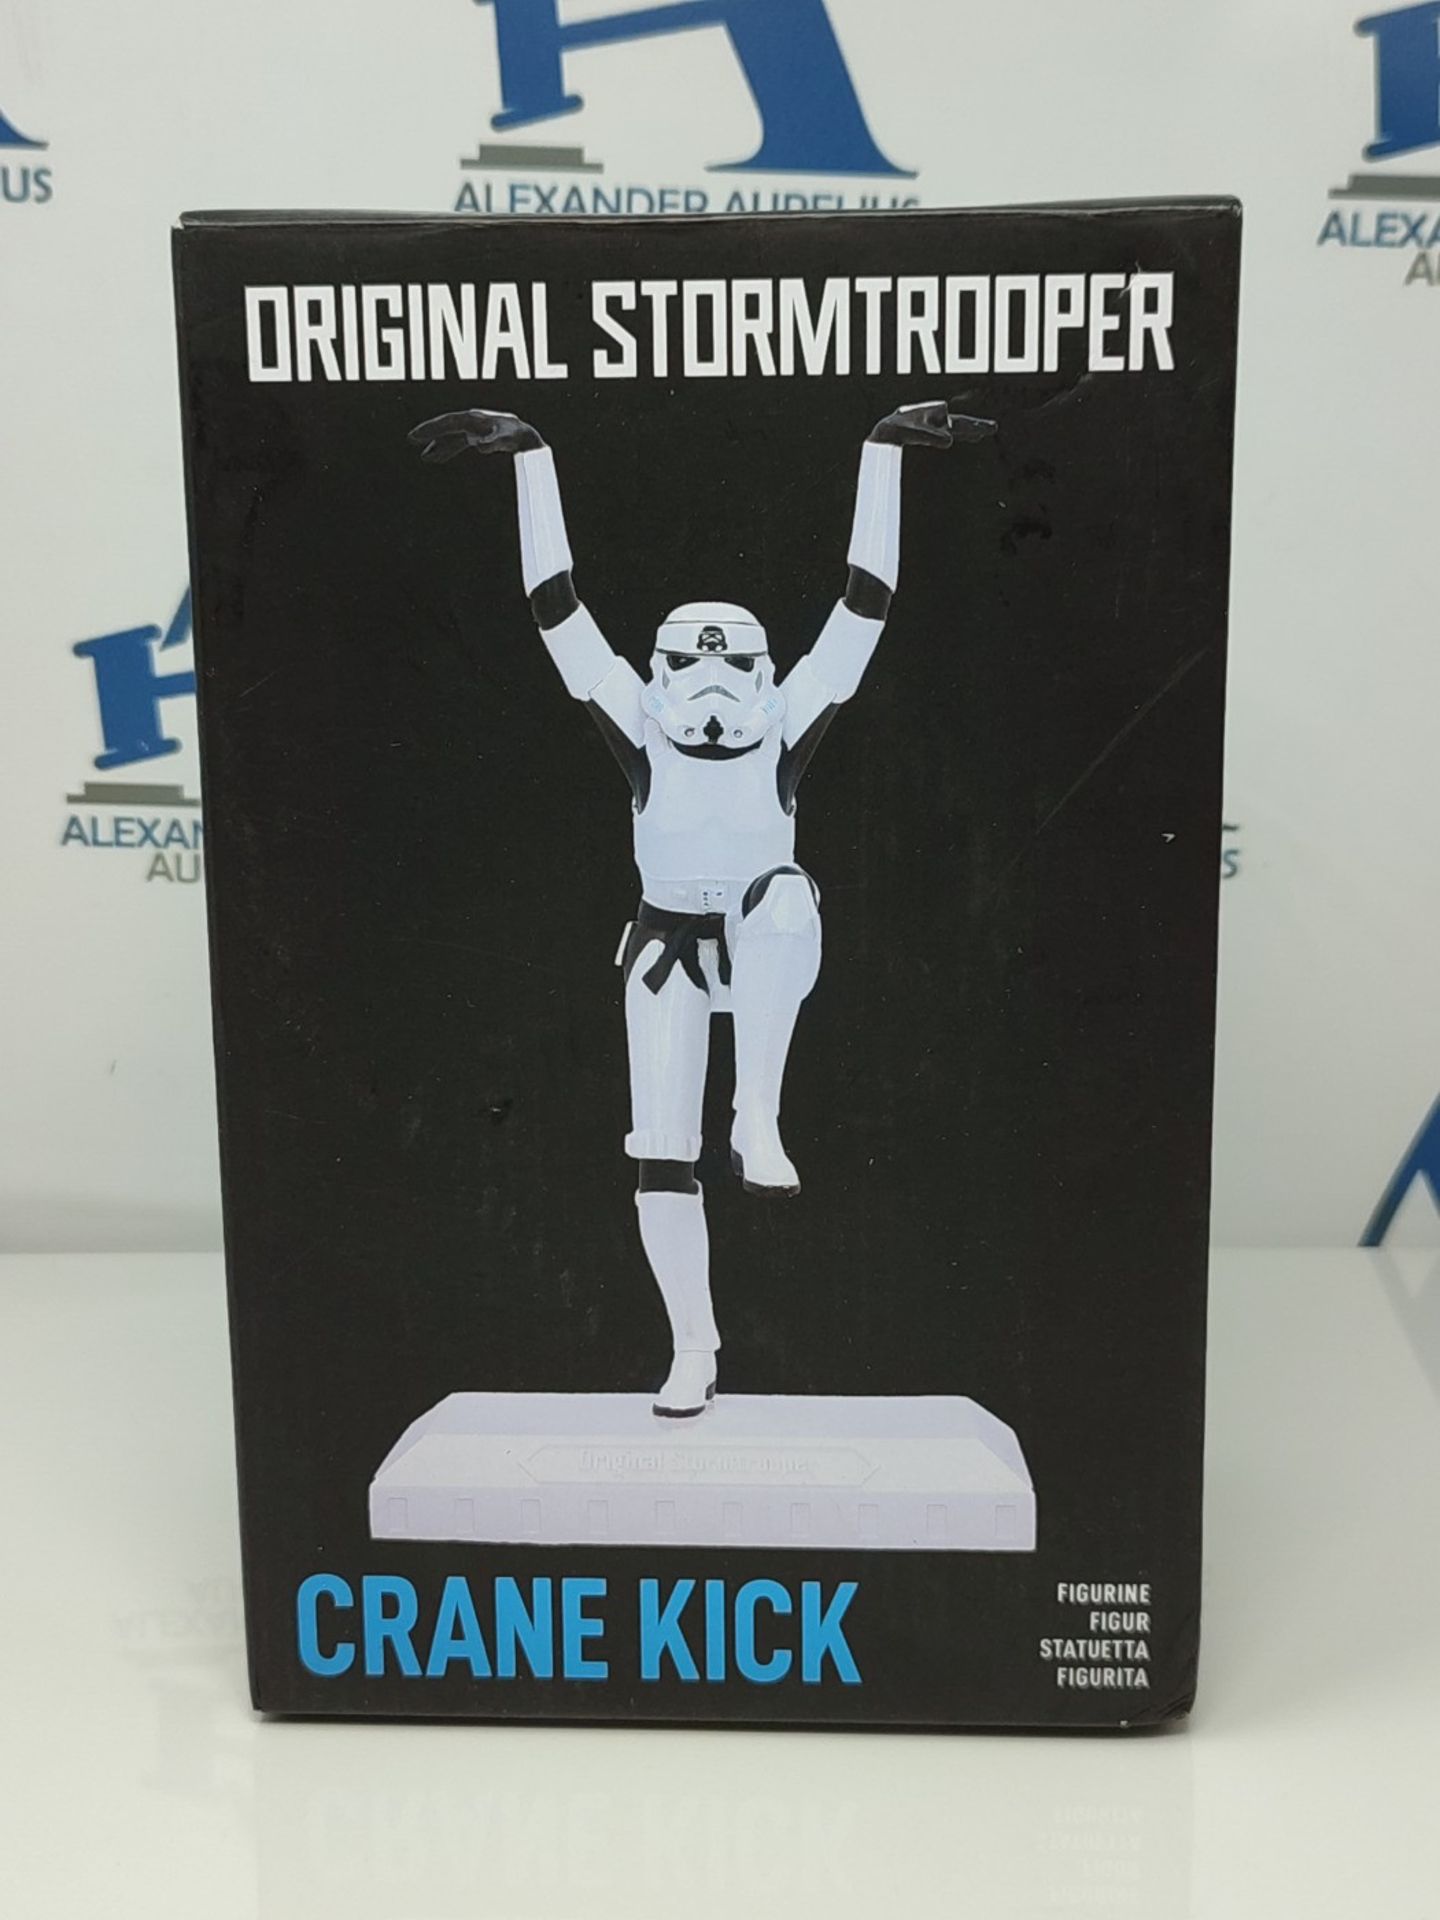 [CRACKED] Nemesis Now Stormtrooper Crane Kick - Image 2 of 3